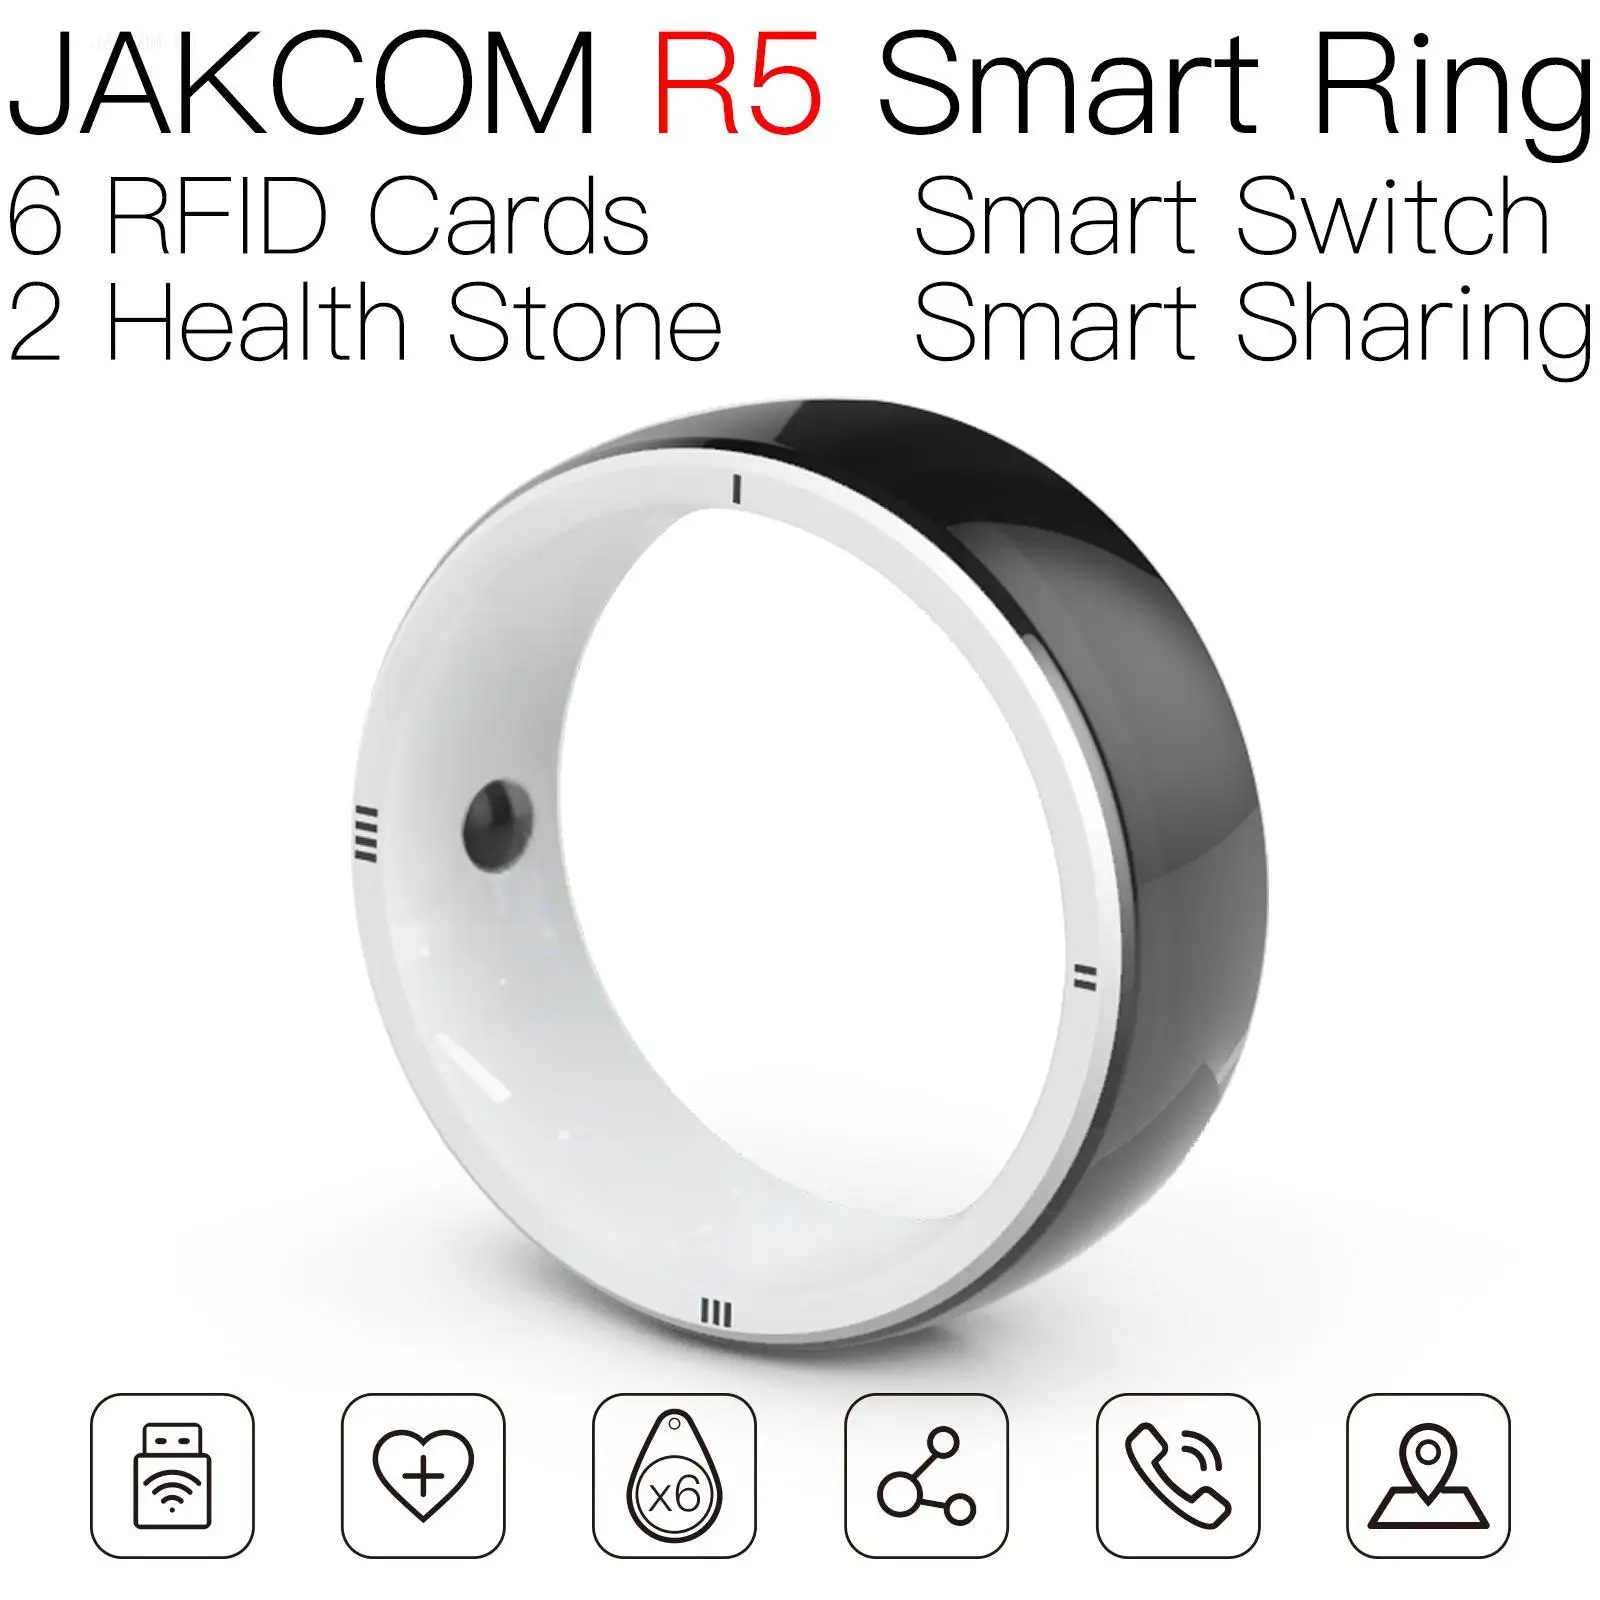 

JAKCOM R5 Smart Ring Nice than rfid writable key fobs 125khz smart card emulator zigbee mqtt carte amiboo serie 1 chip